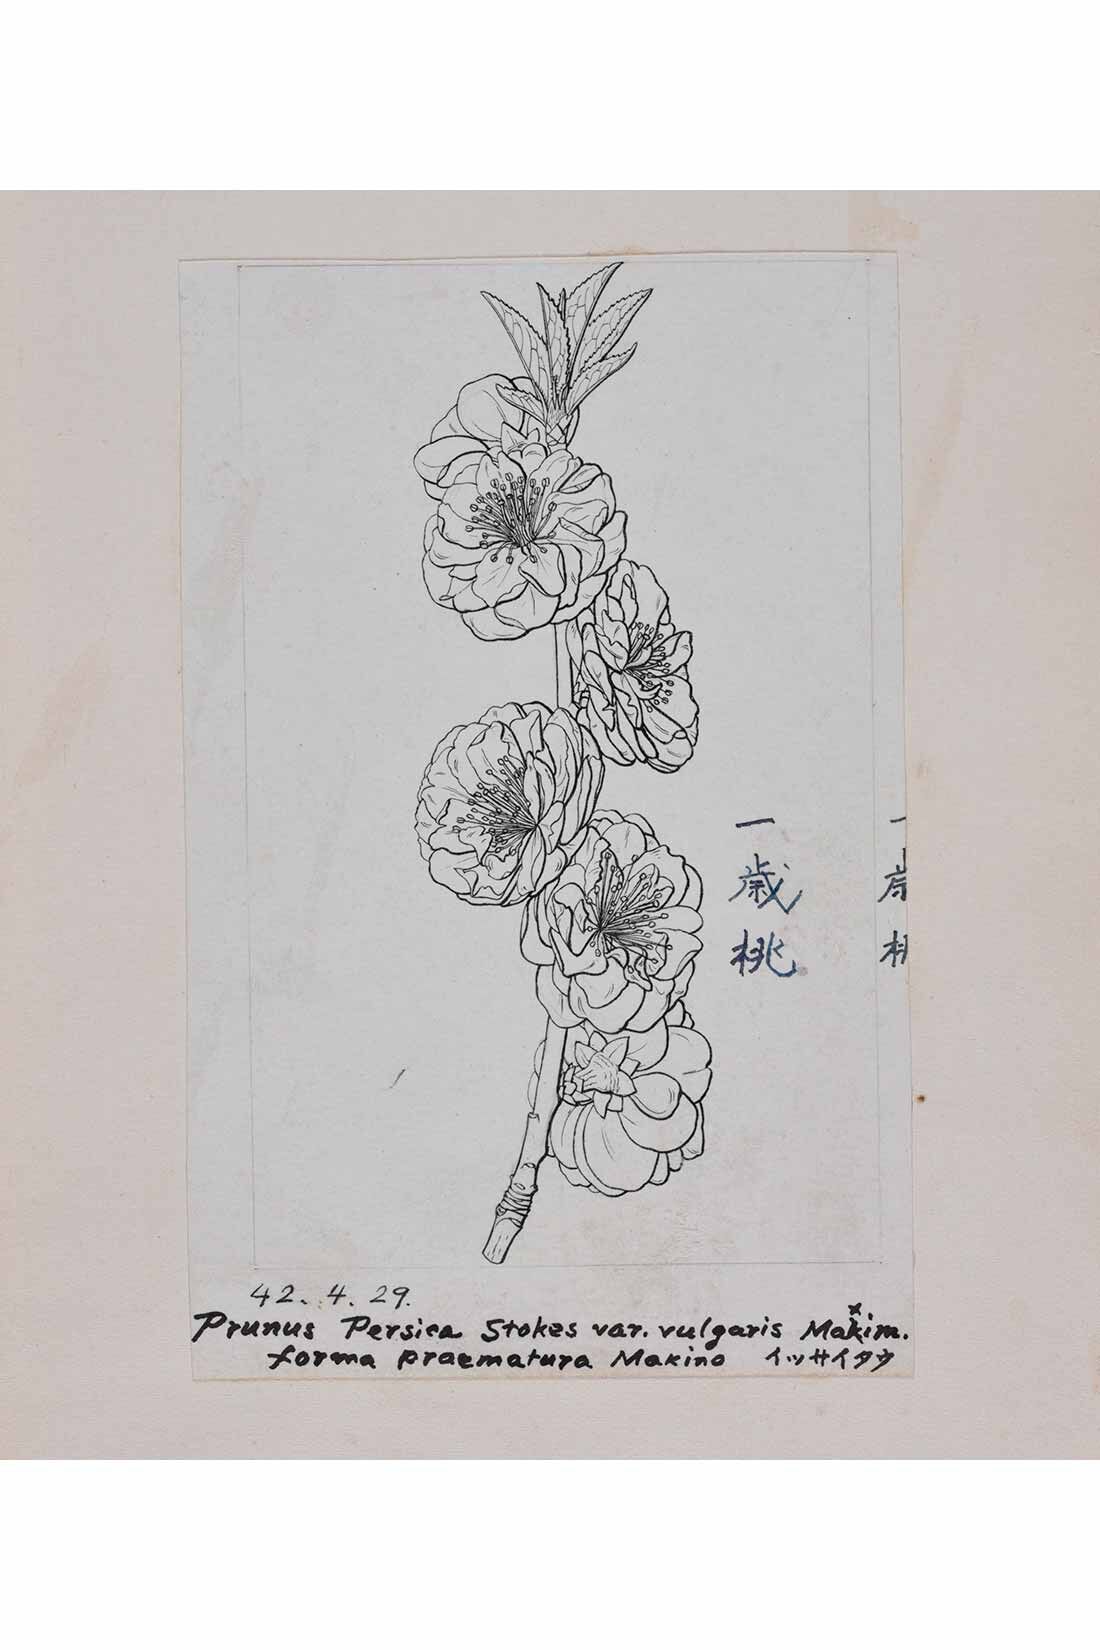 IEDIT|牧野植物園×IEDIT[イディット]コラボ 牧野博士の描いた一歳桃のワンピース〈ベージュ〉|1909年か 明治時代にケント紙に筆で描かれた「一歳桃」